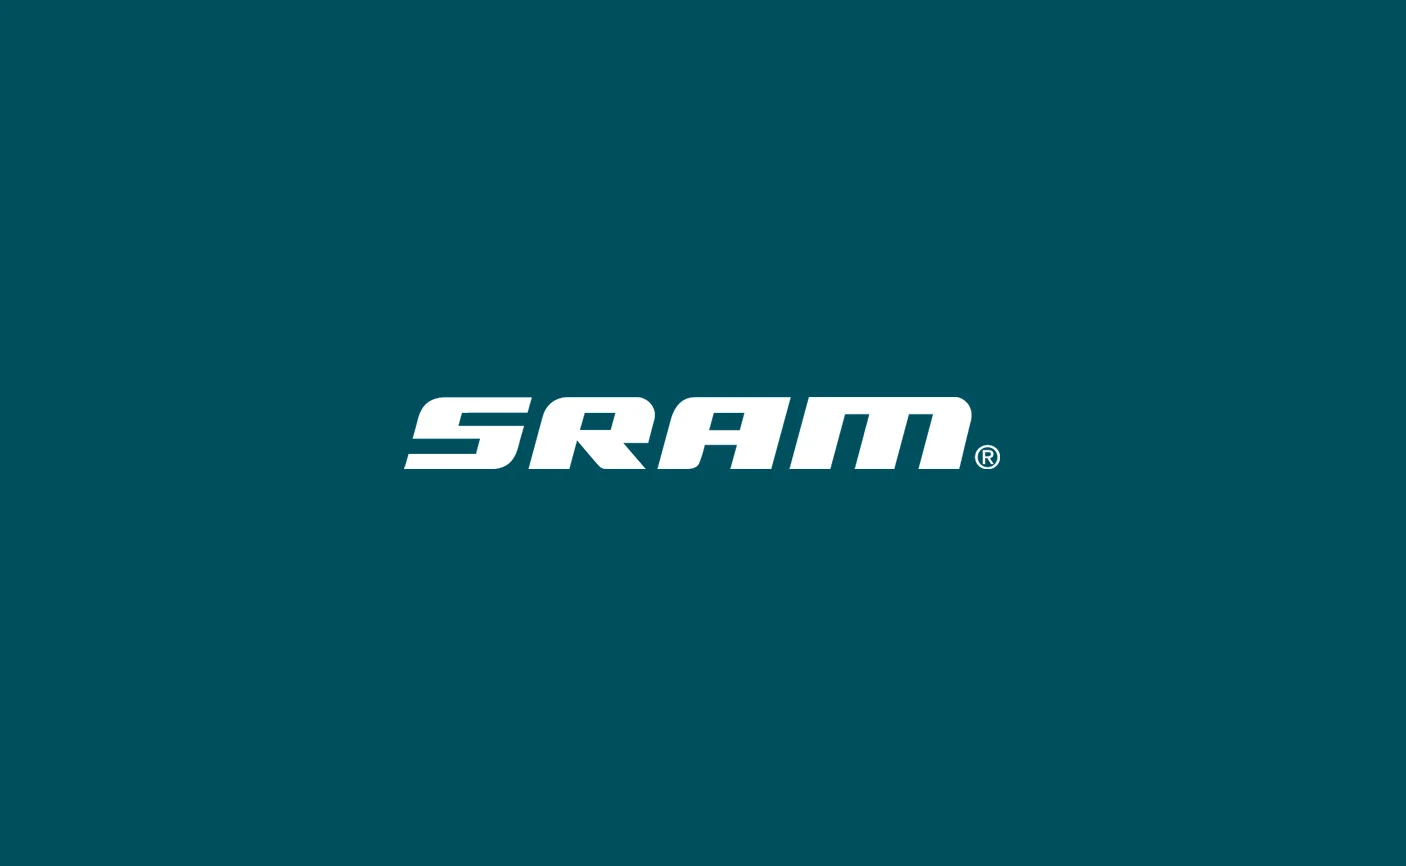 SRAM - customer testimonial and customer reference